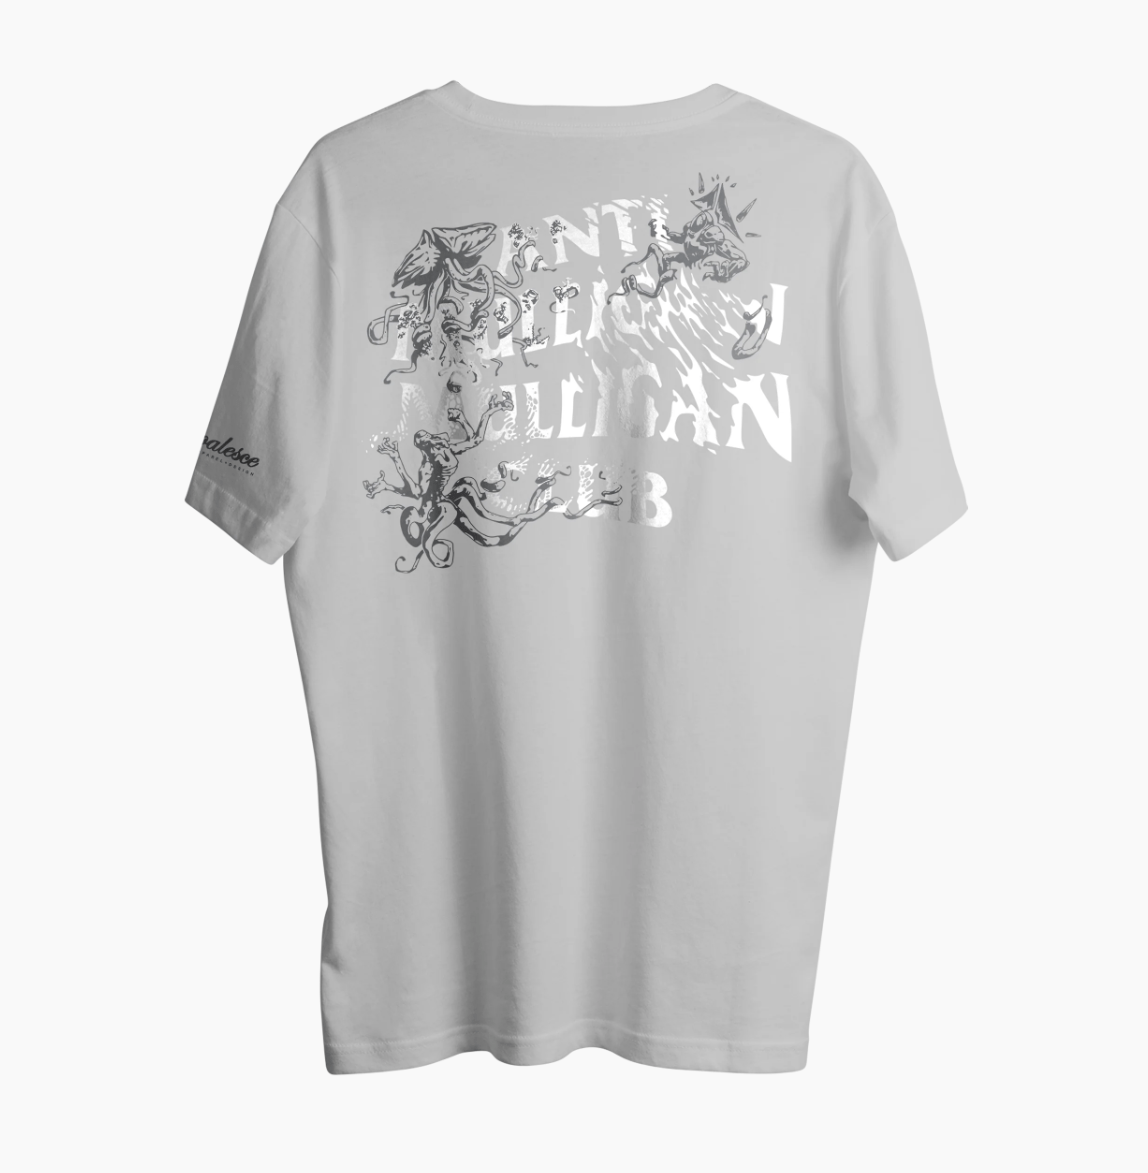 Coalesce Apparel anti-mulligan mulligan club t-shirt